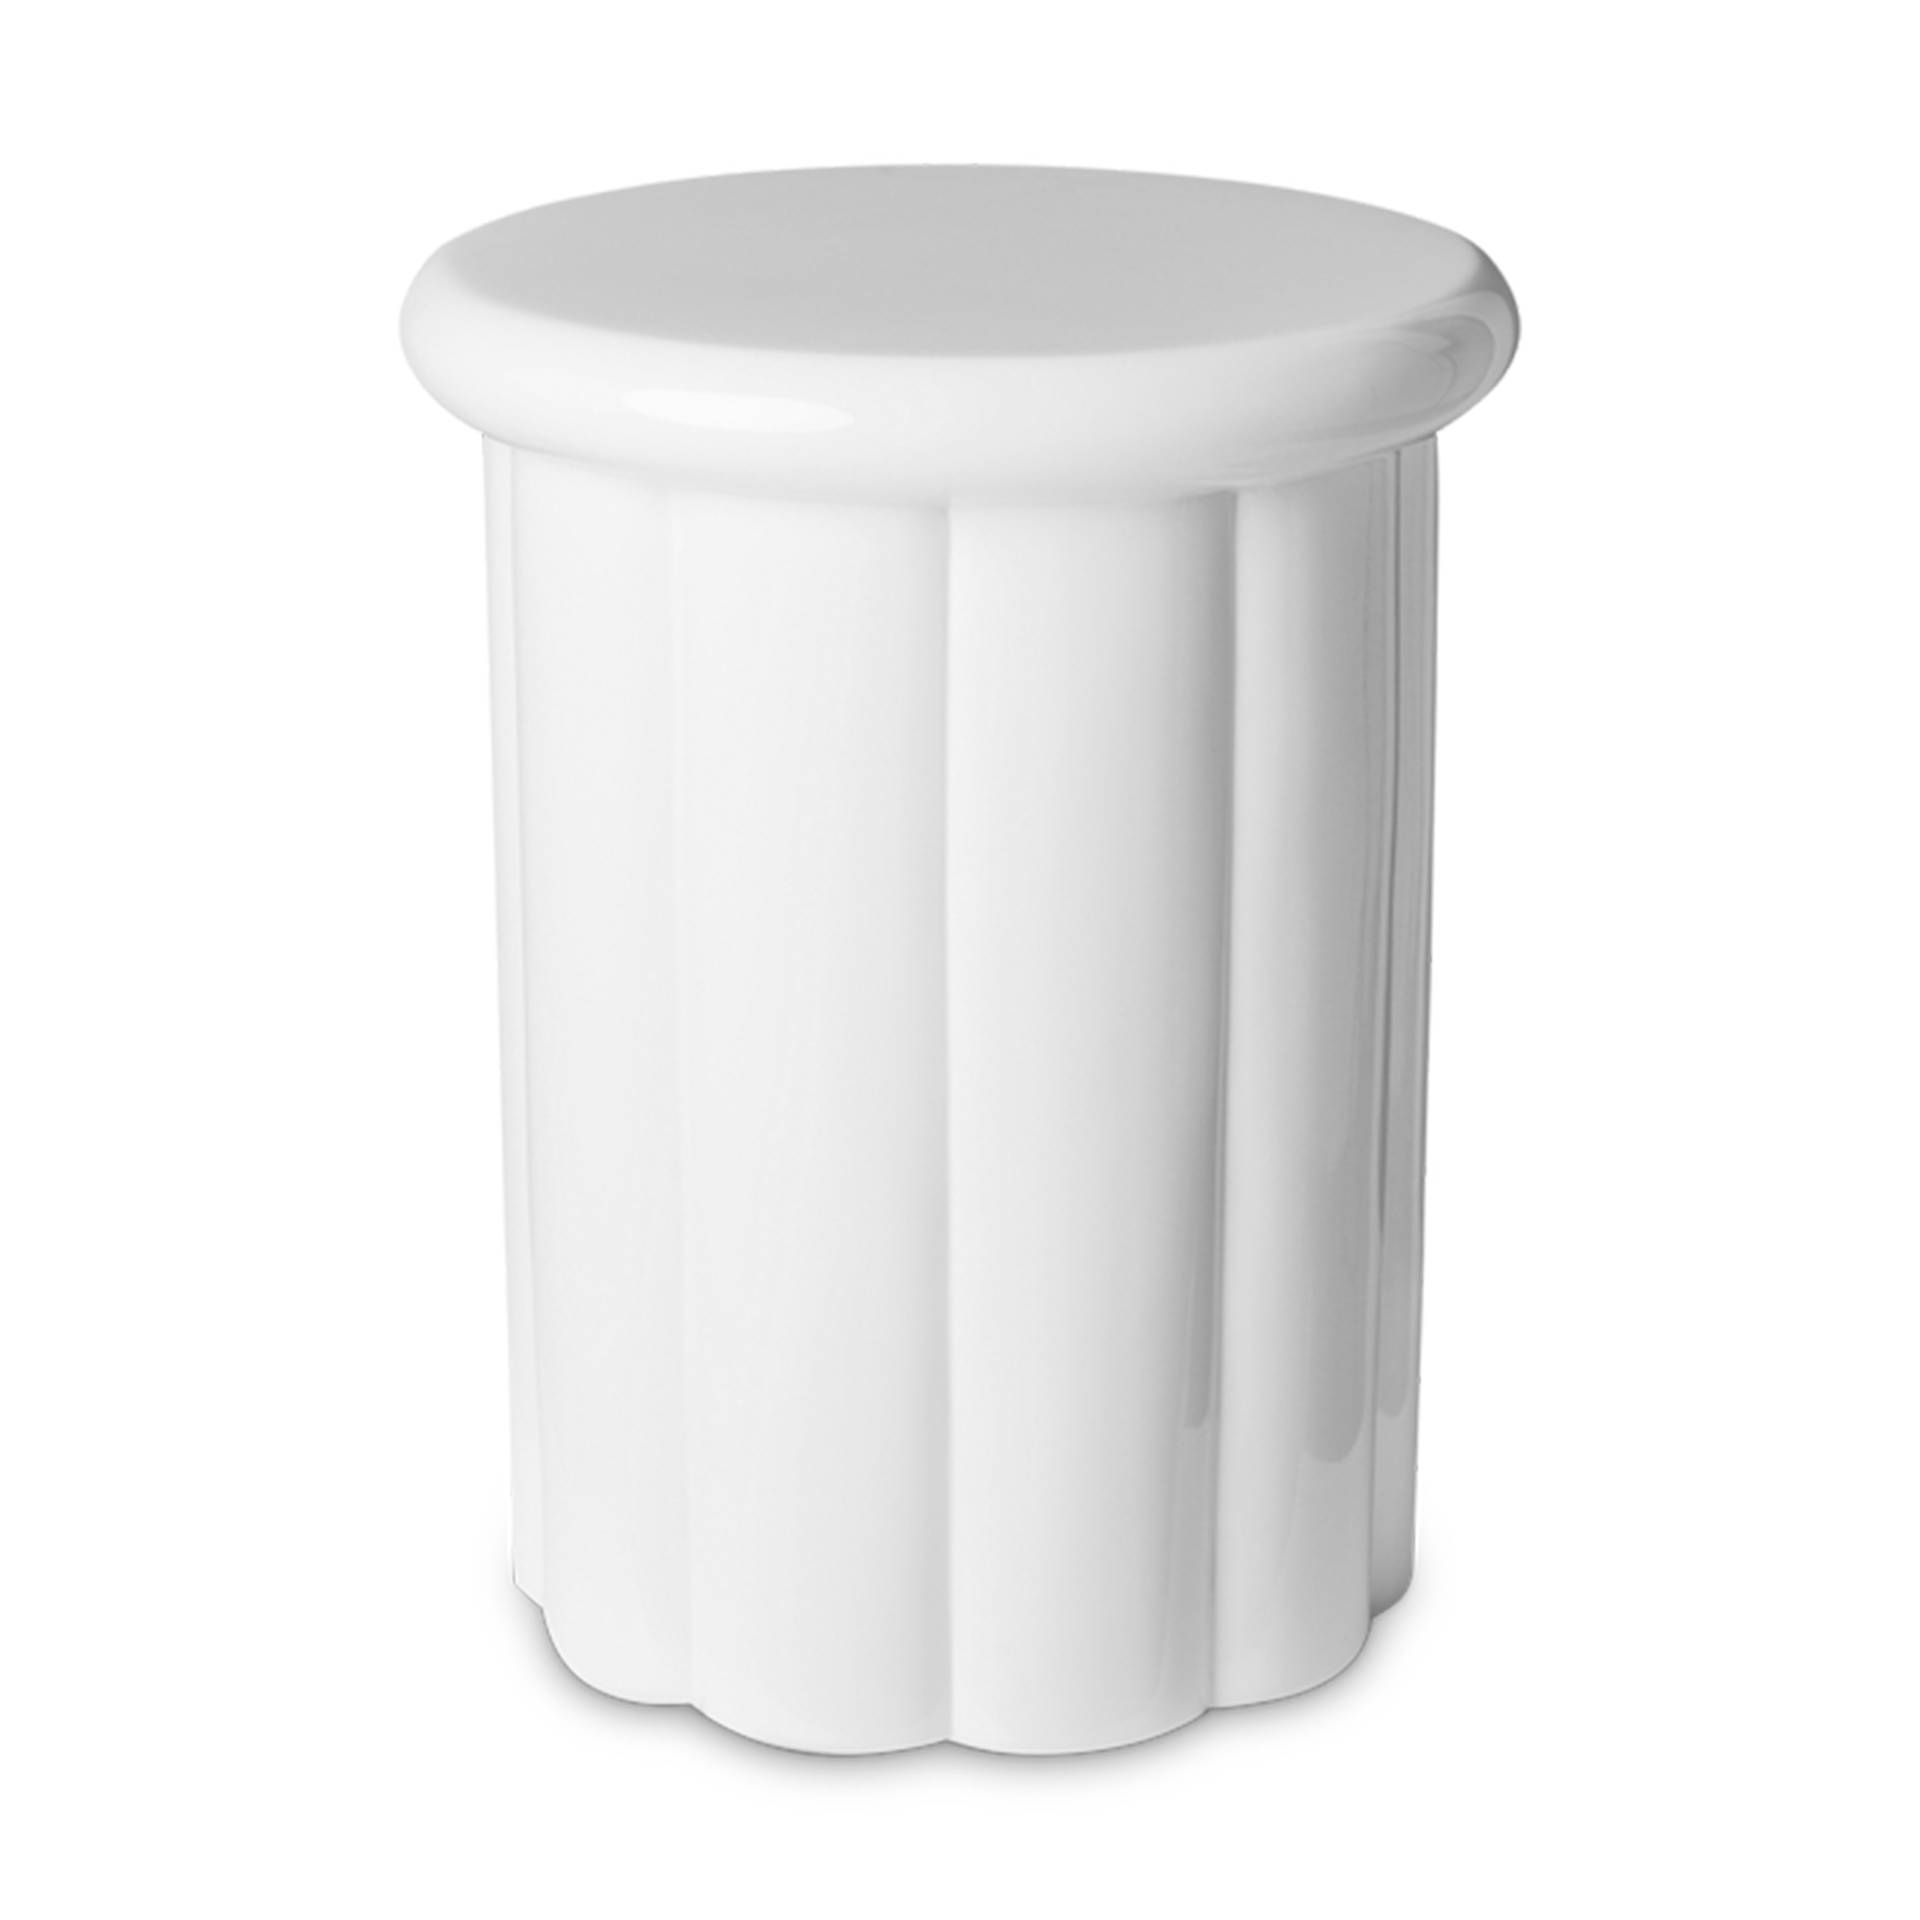 pols potten - Roman Hocker - weiß/lackiert/H x Ø 46,5x35,5xm von pols potten